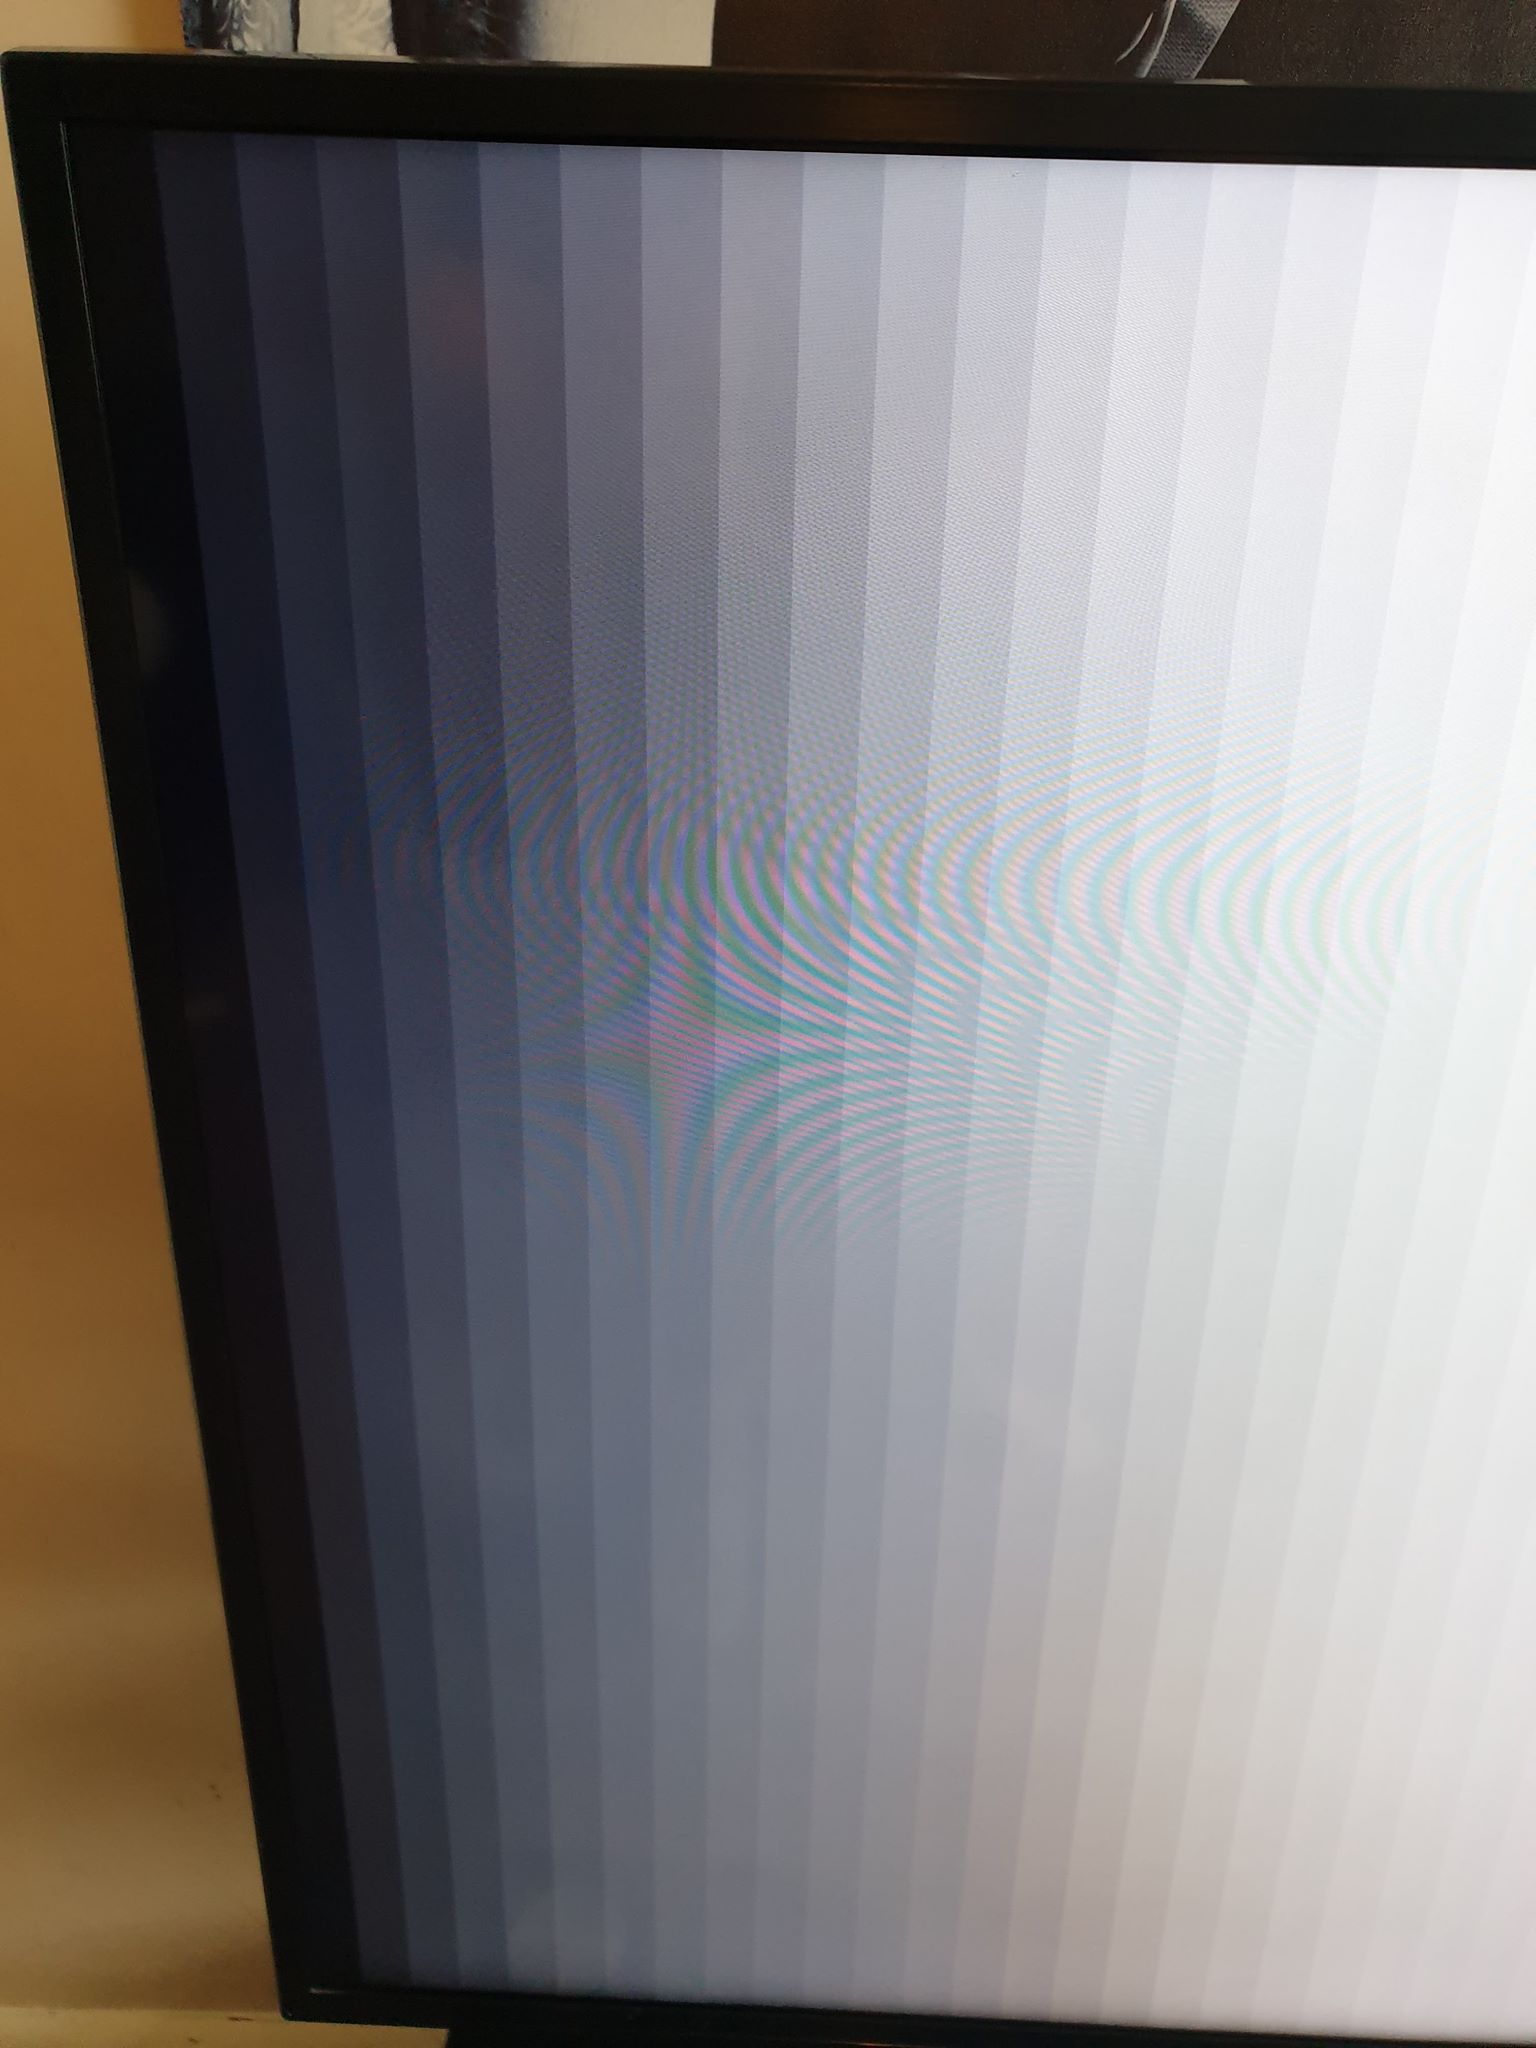 Weird White Circles On My 4K Samsung TV - Samsung Community